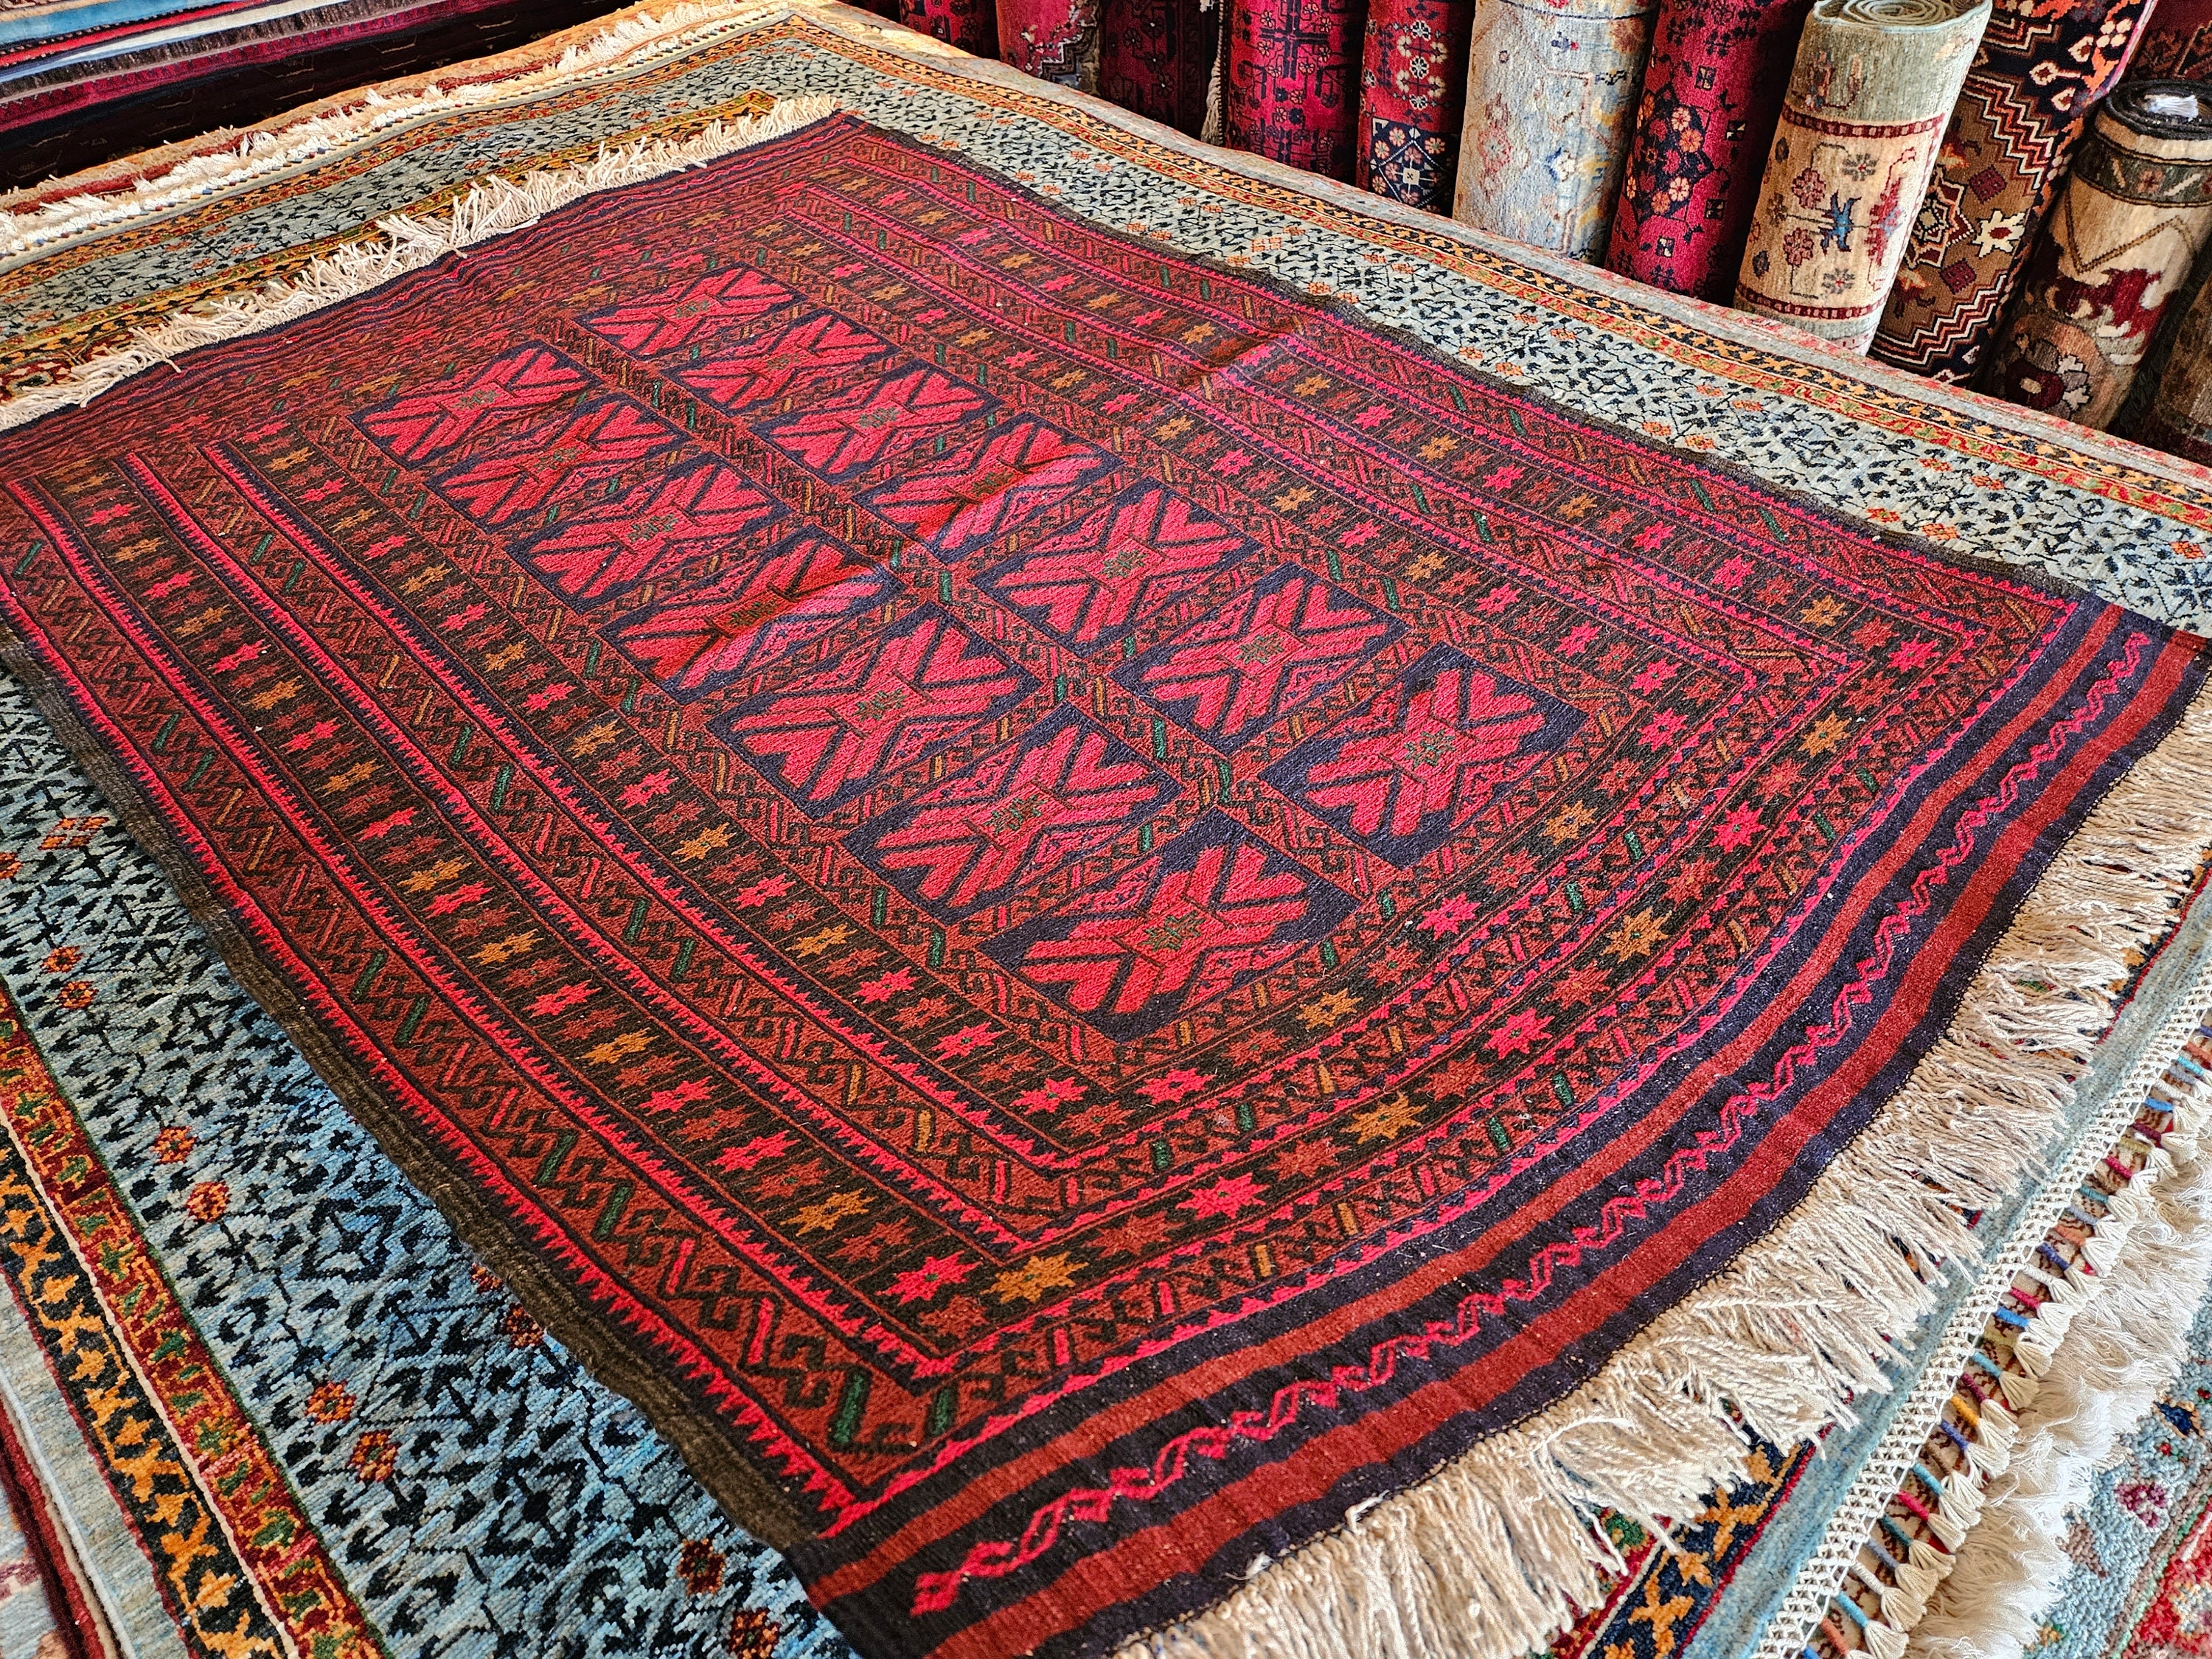 Stunning Vintage Well-made Sumac Handwoven Kilim Rug, Sumac Afghan kilim rug, area interior rug,floor design rug, traditional wool rug